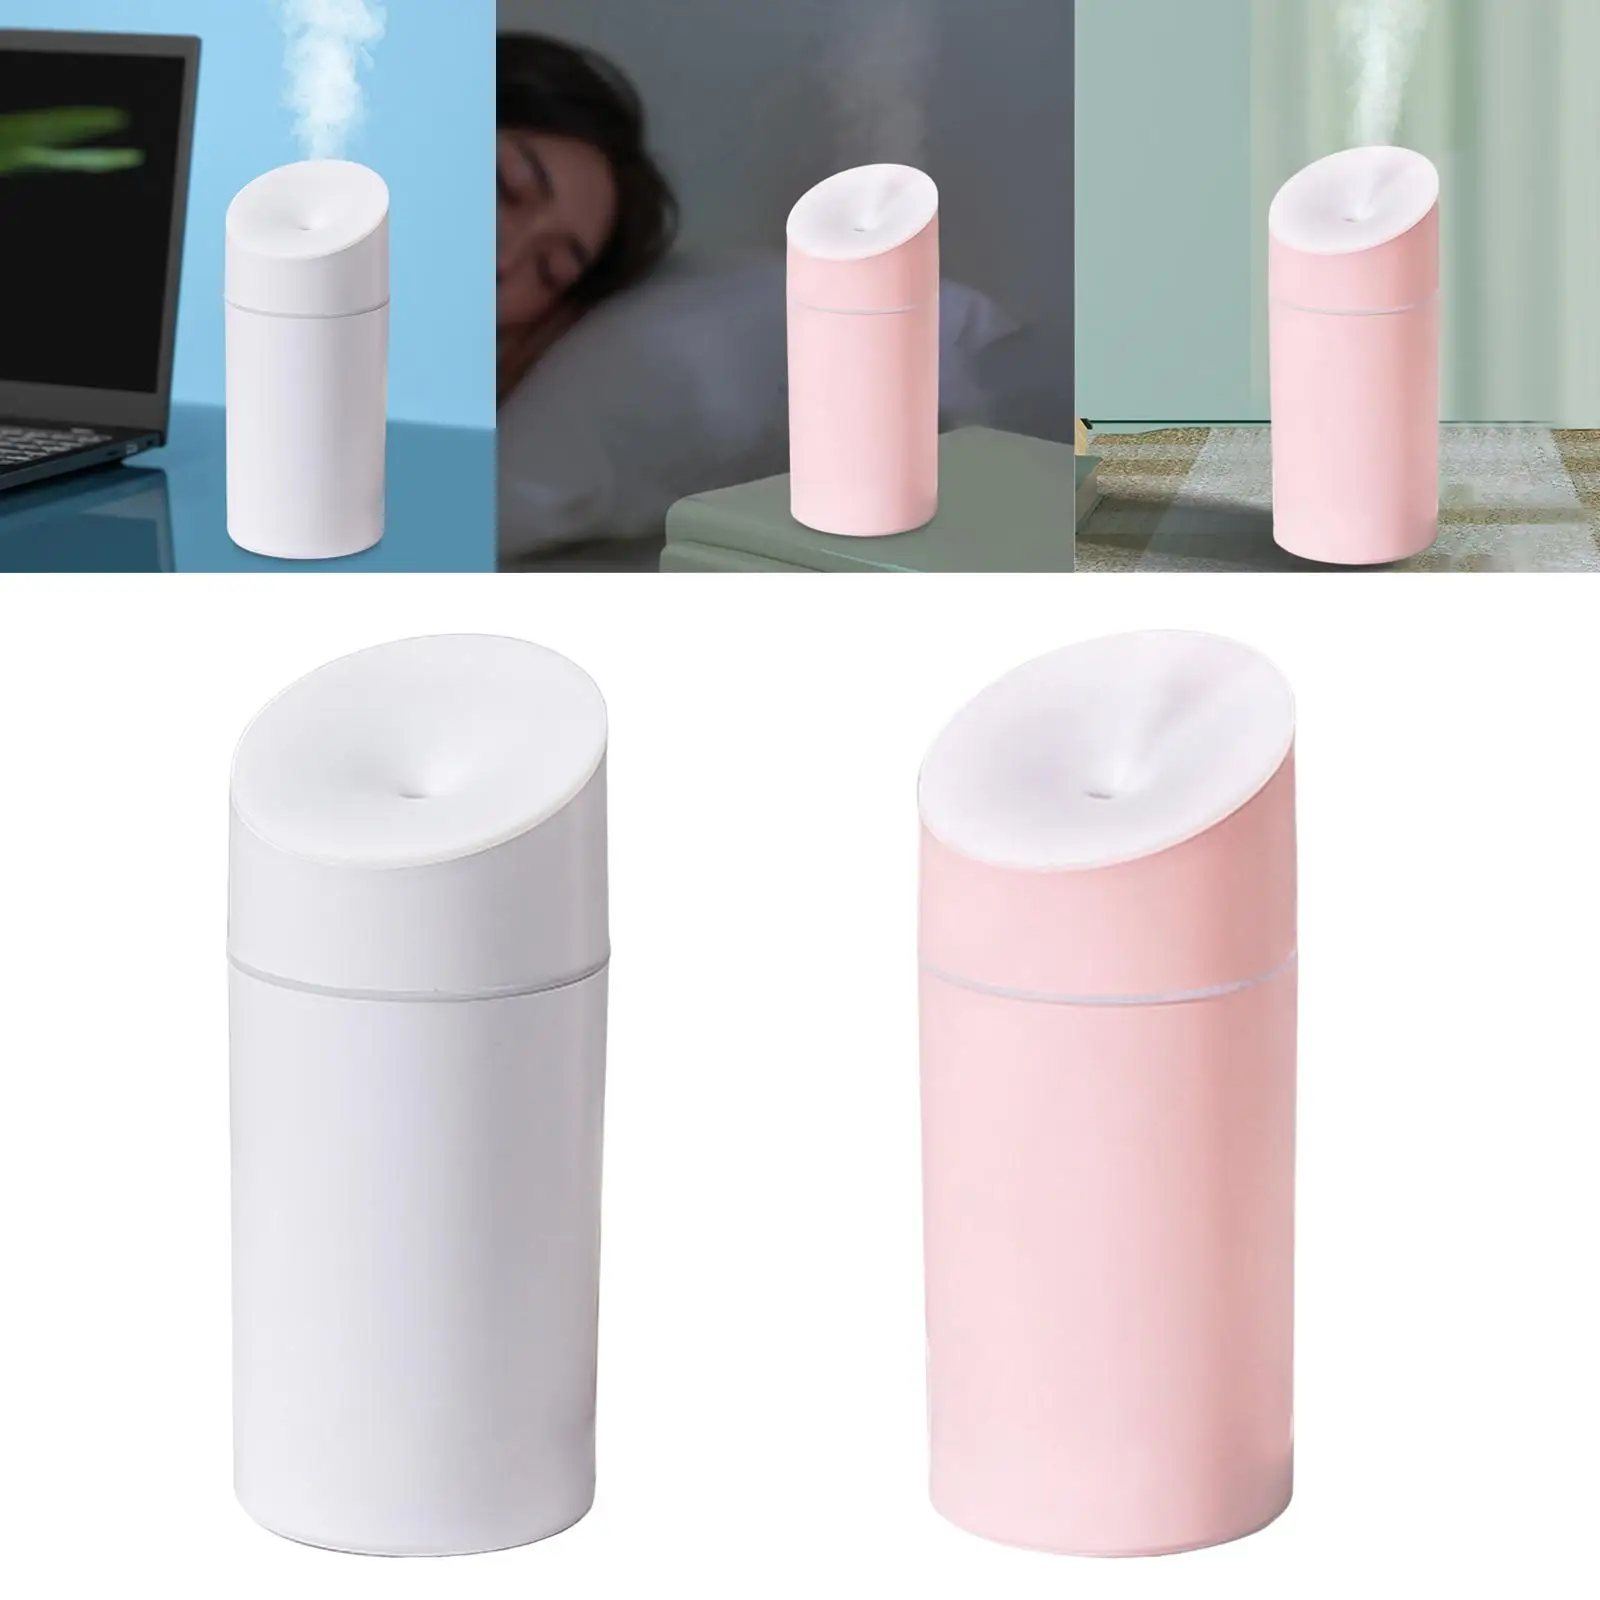 Portable Air Humidifier USB Night Lamp Fogger mist Adjustable Mist Mode for Desk